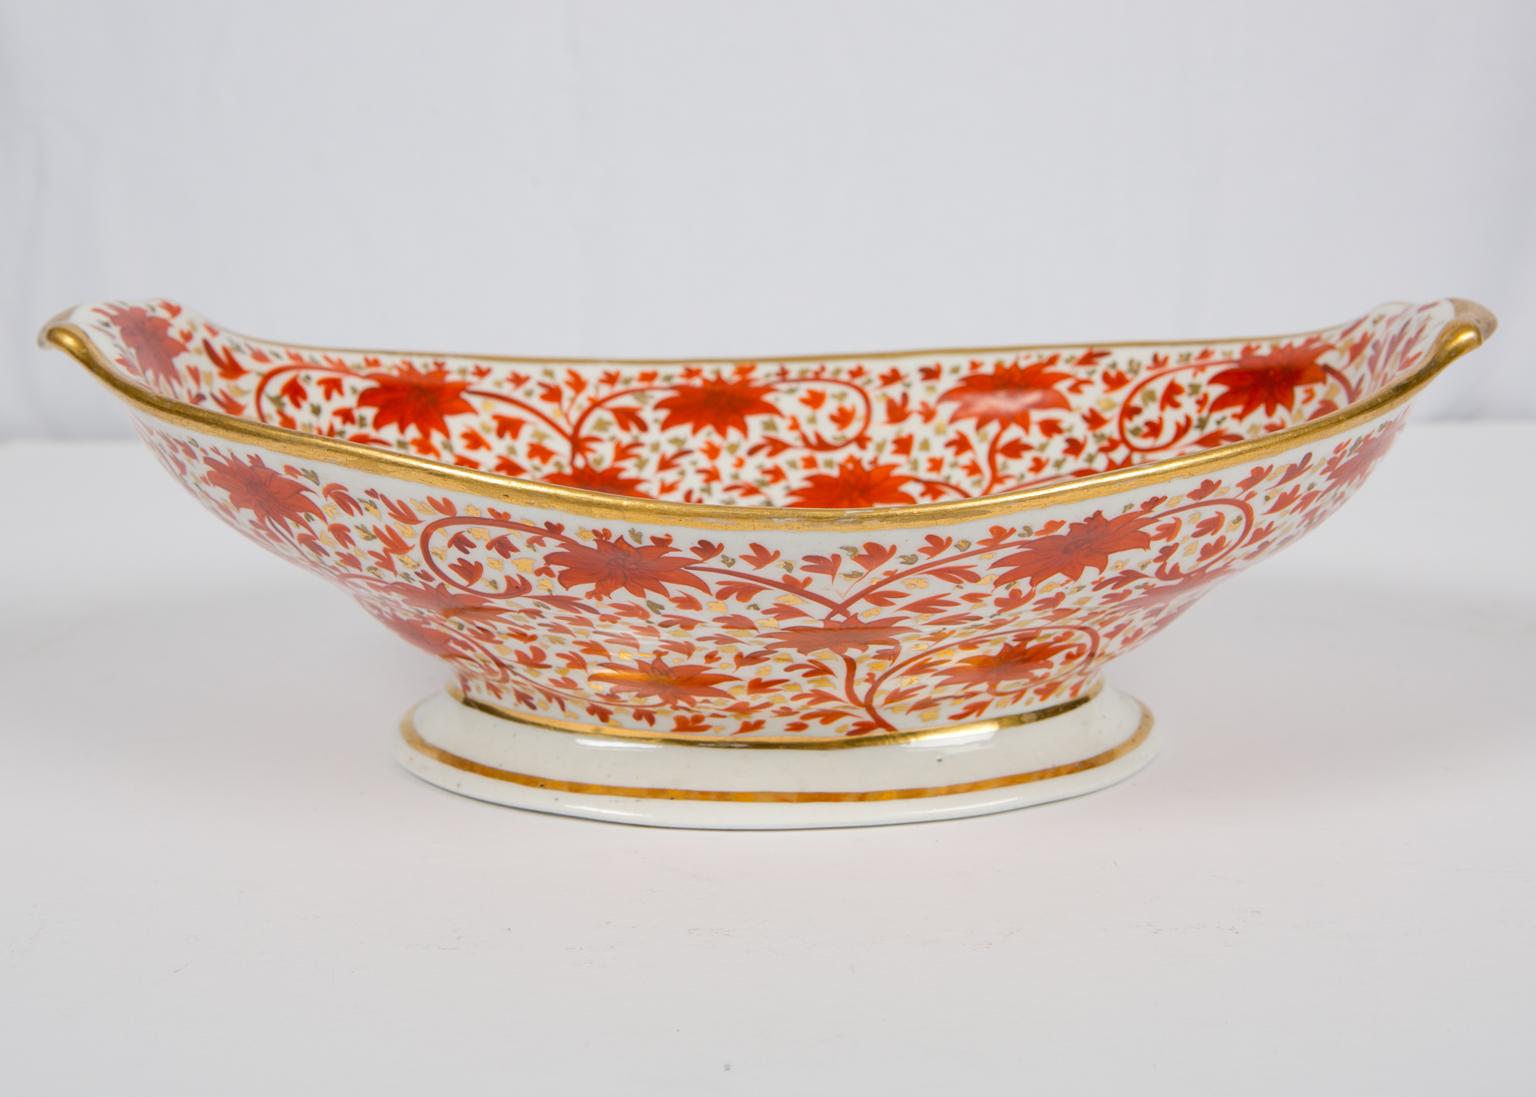 Set Antique Porcelain Dishes in Coalport's Red Chrysanthemum Pattern circa 1810 1